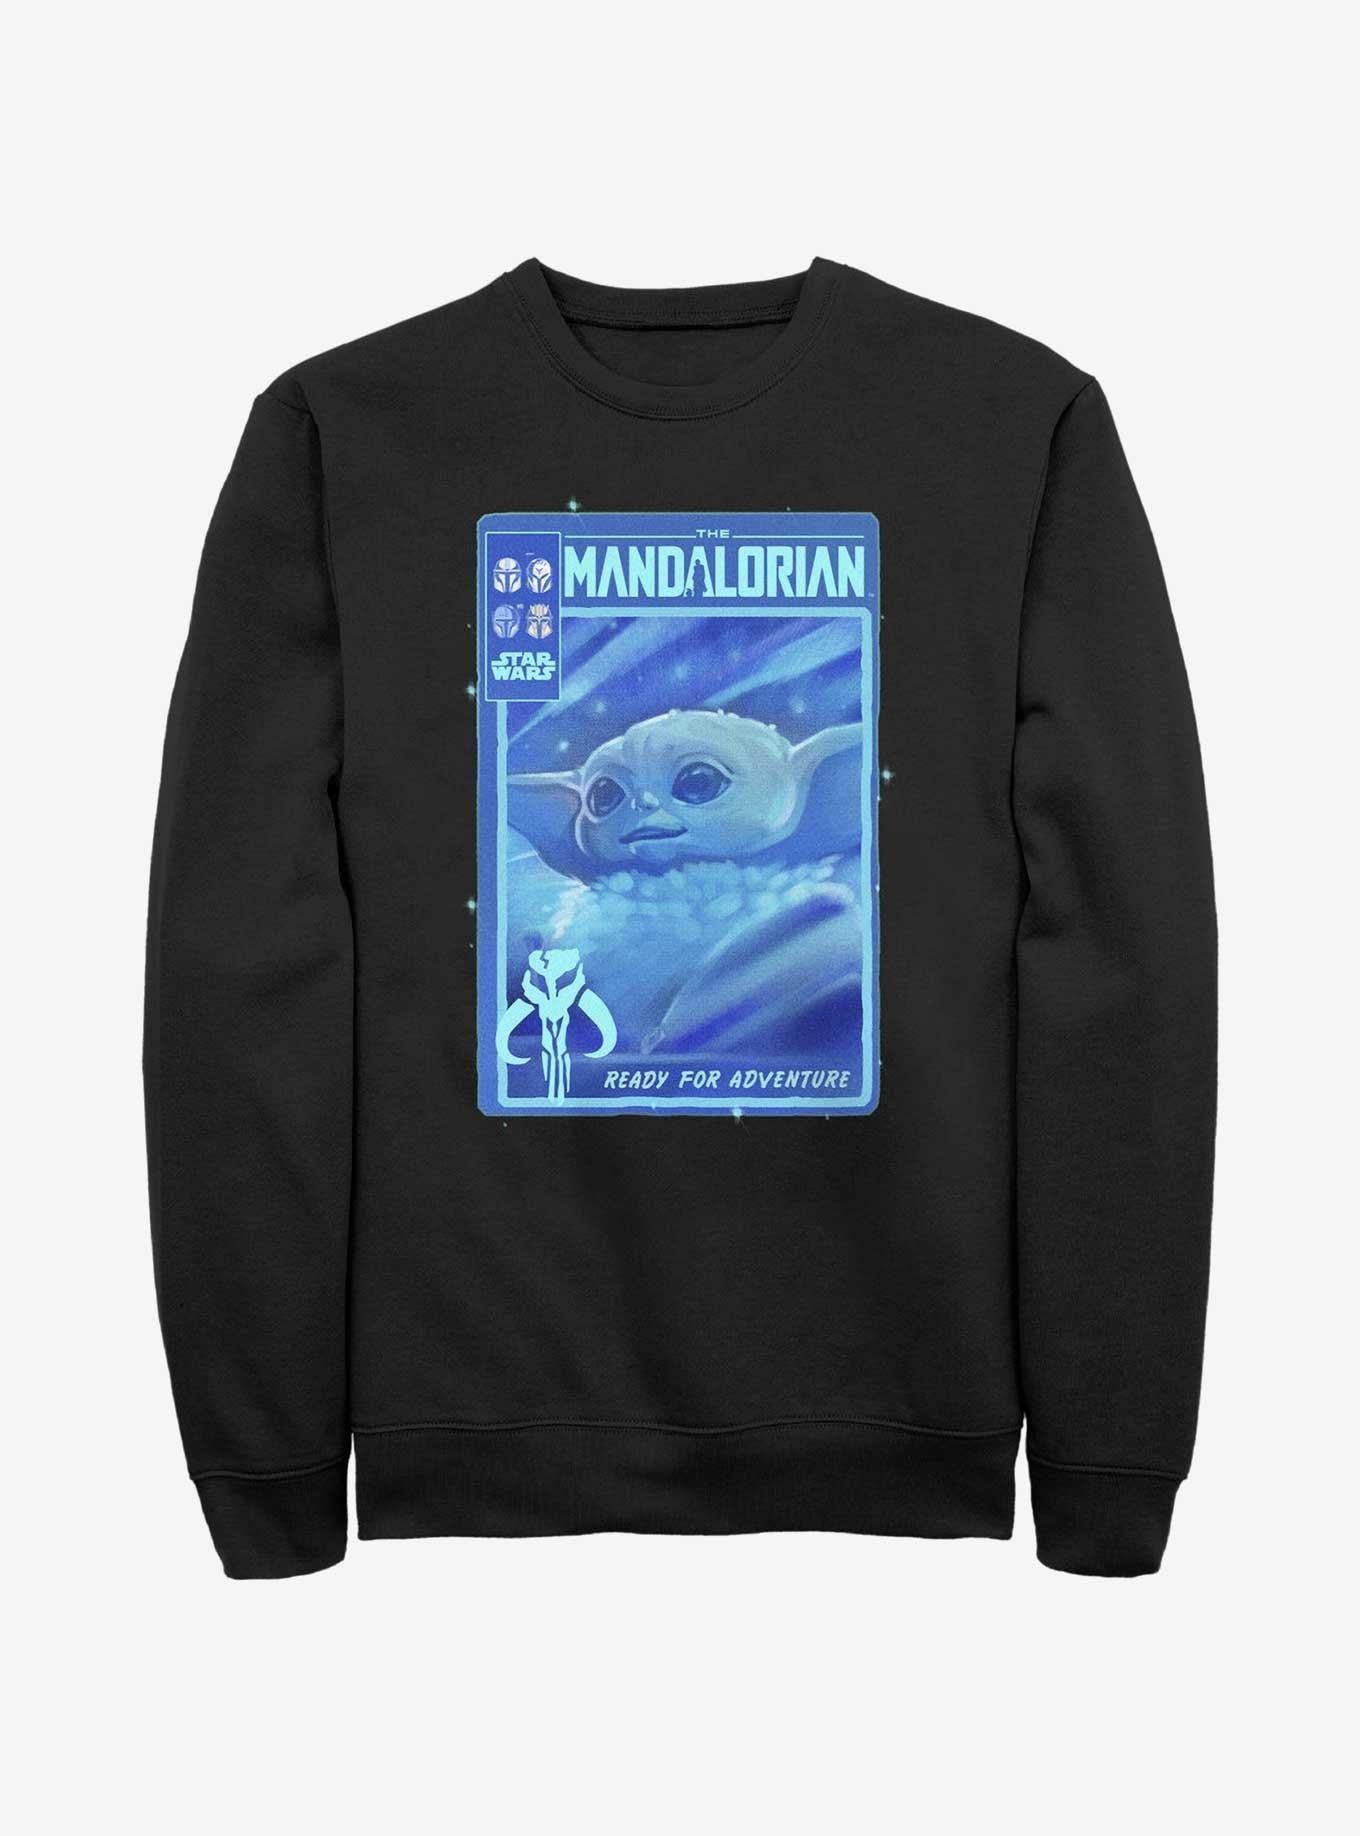 Star Wars The Mandalorian Grogu Ready For Adventure Poster Sweatshirt